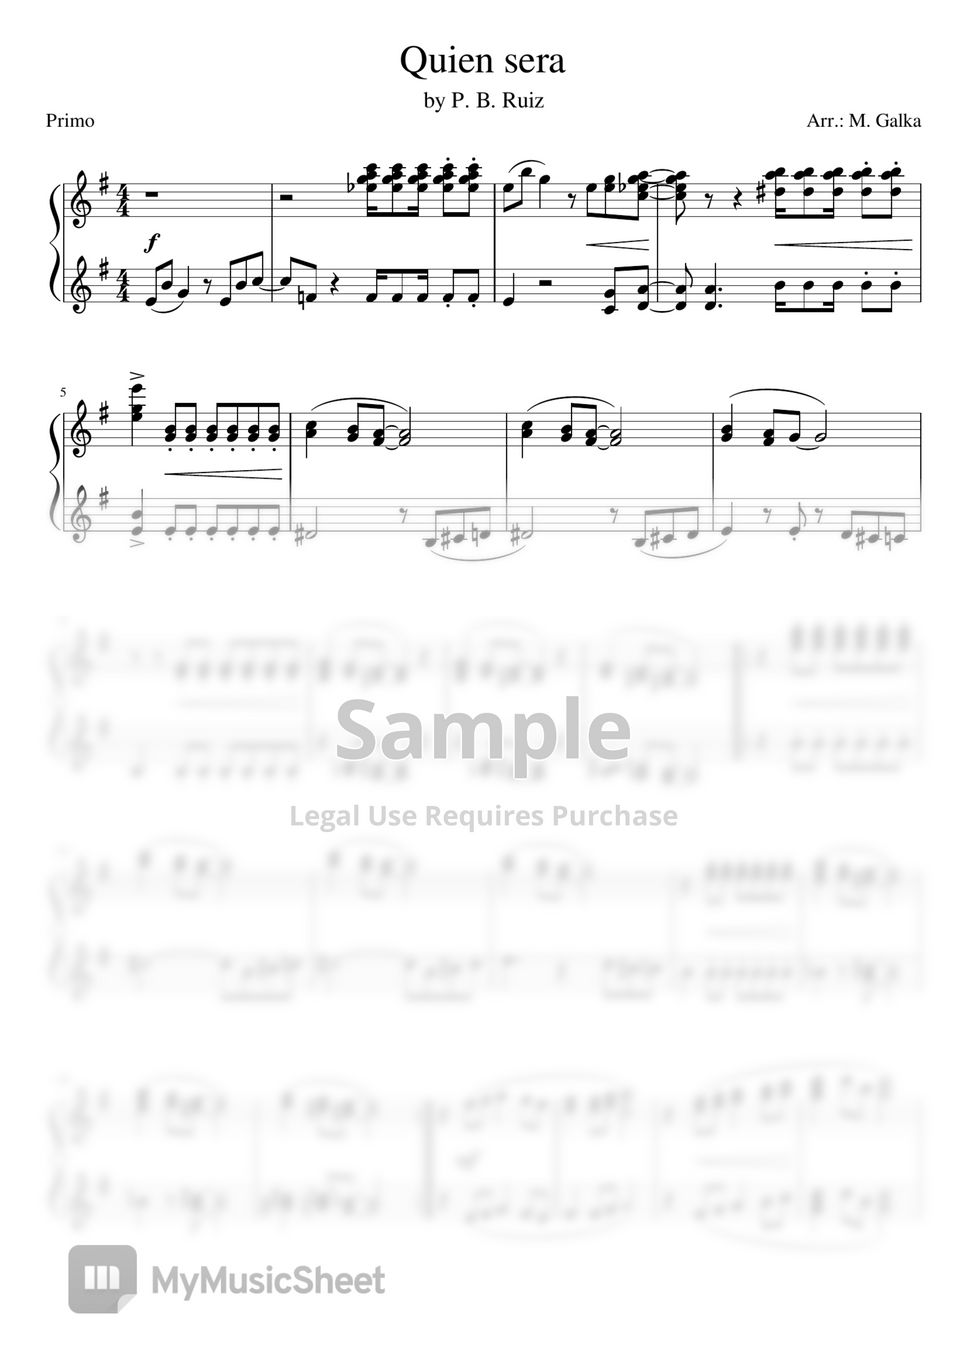 P. B. Ruiz - Quien sera - Sway - Piano 4 hands by Magdalena Galka